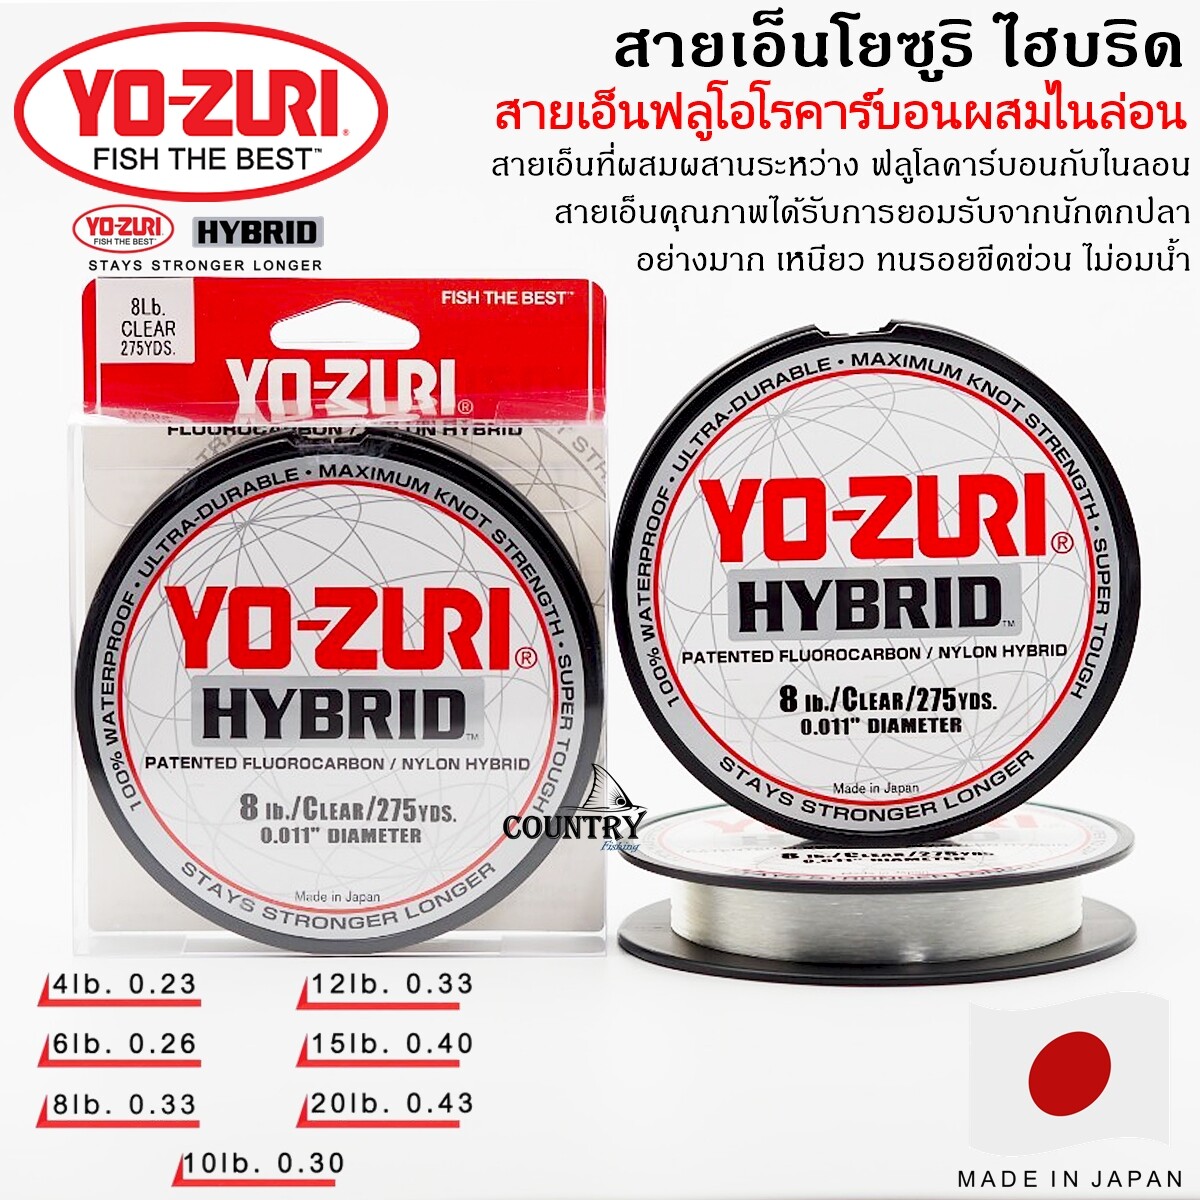 Yo-Zuri Top Hybrid Ice Line Patented Fluorocarbon/Nylon Hybrid #R1406-CL-4lb  (Clear)*สายลีดฟลูออโรคาร์บอน/ไนลอน - 7 SEAS PROSHOP (THAILAND)